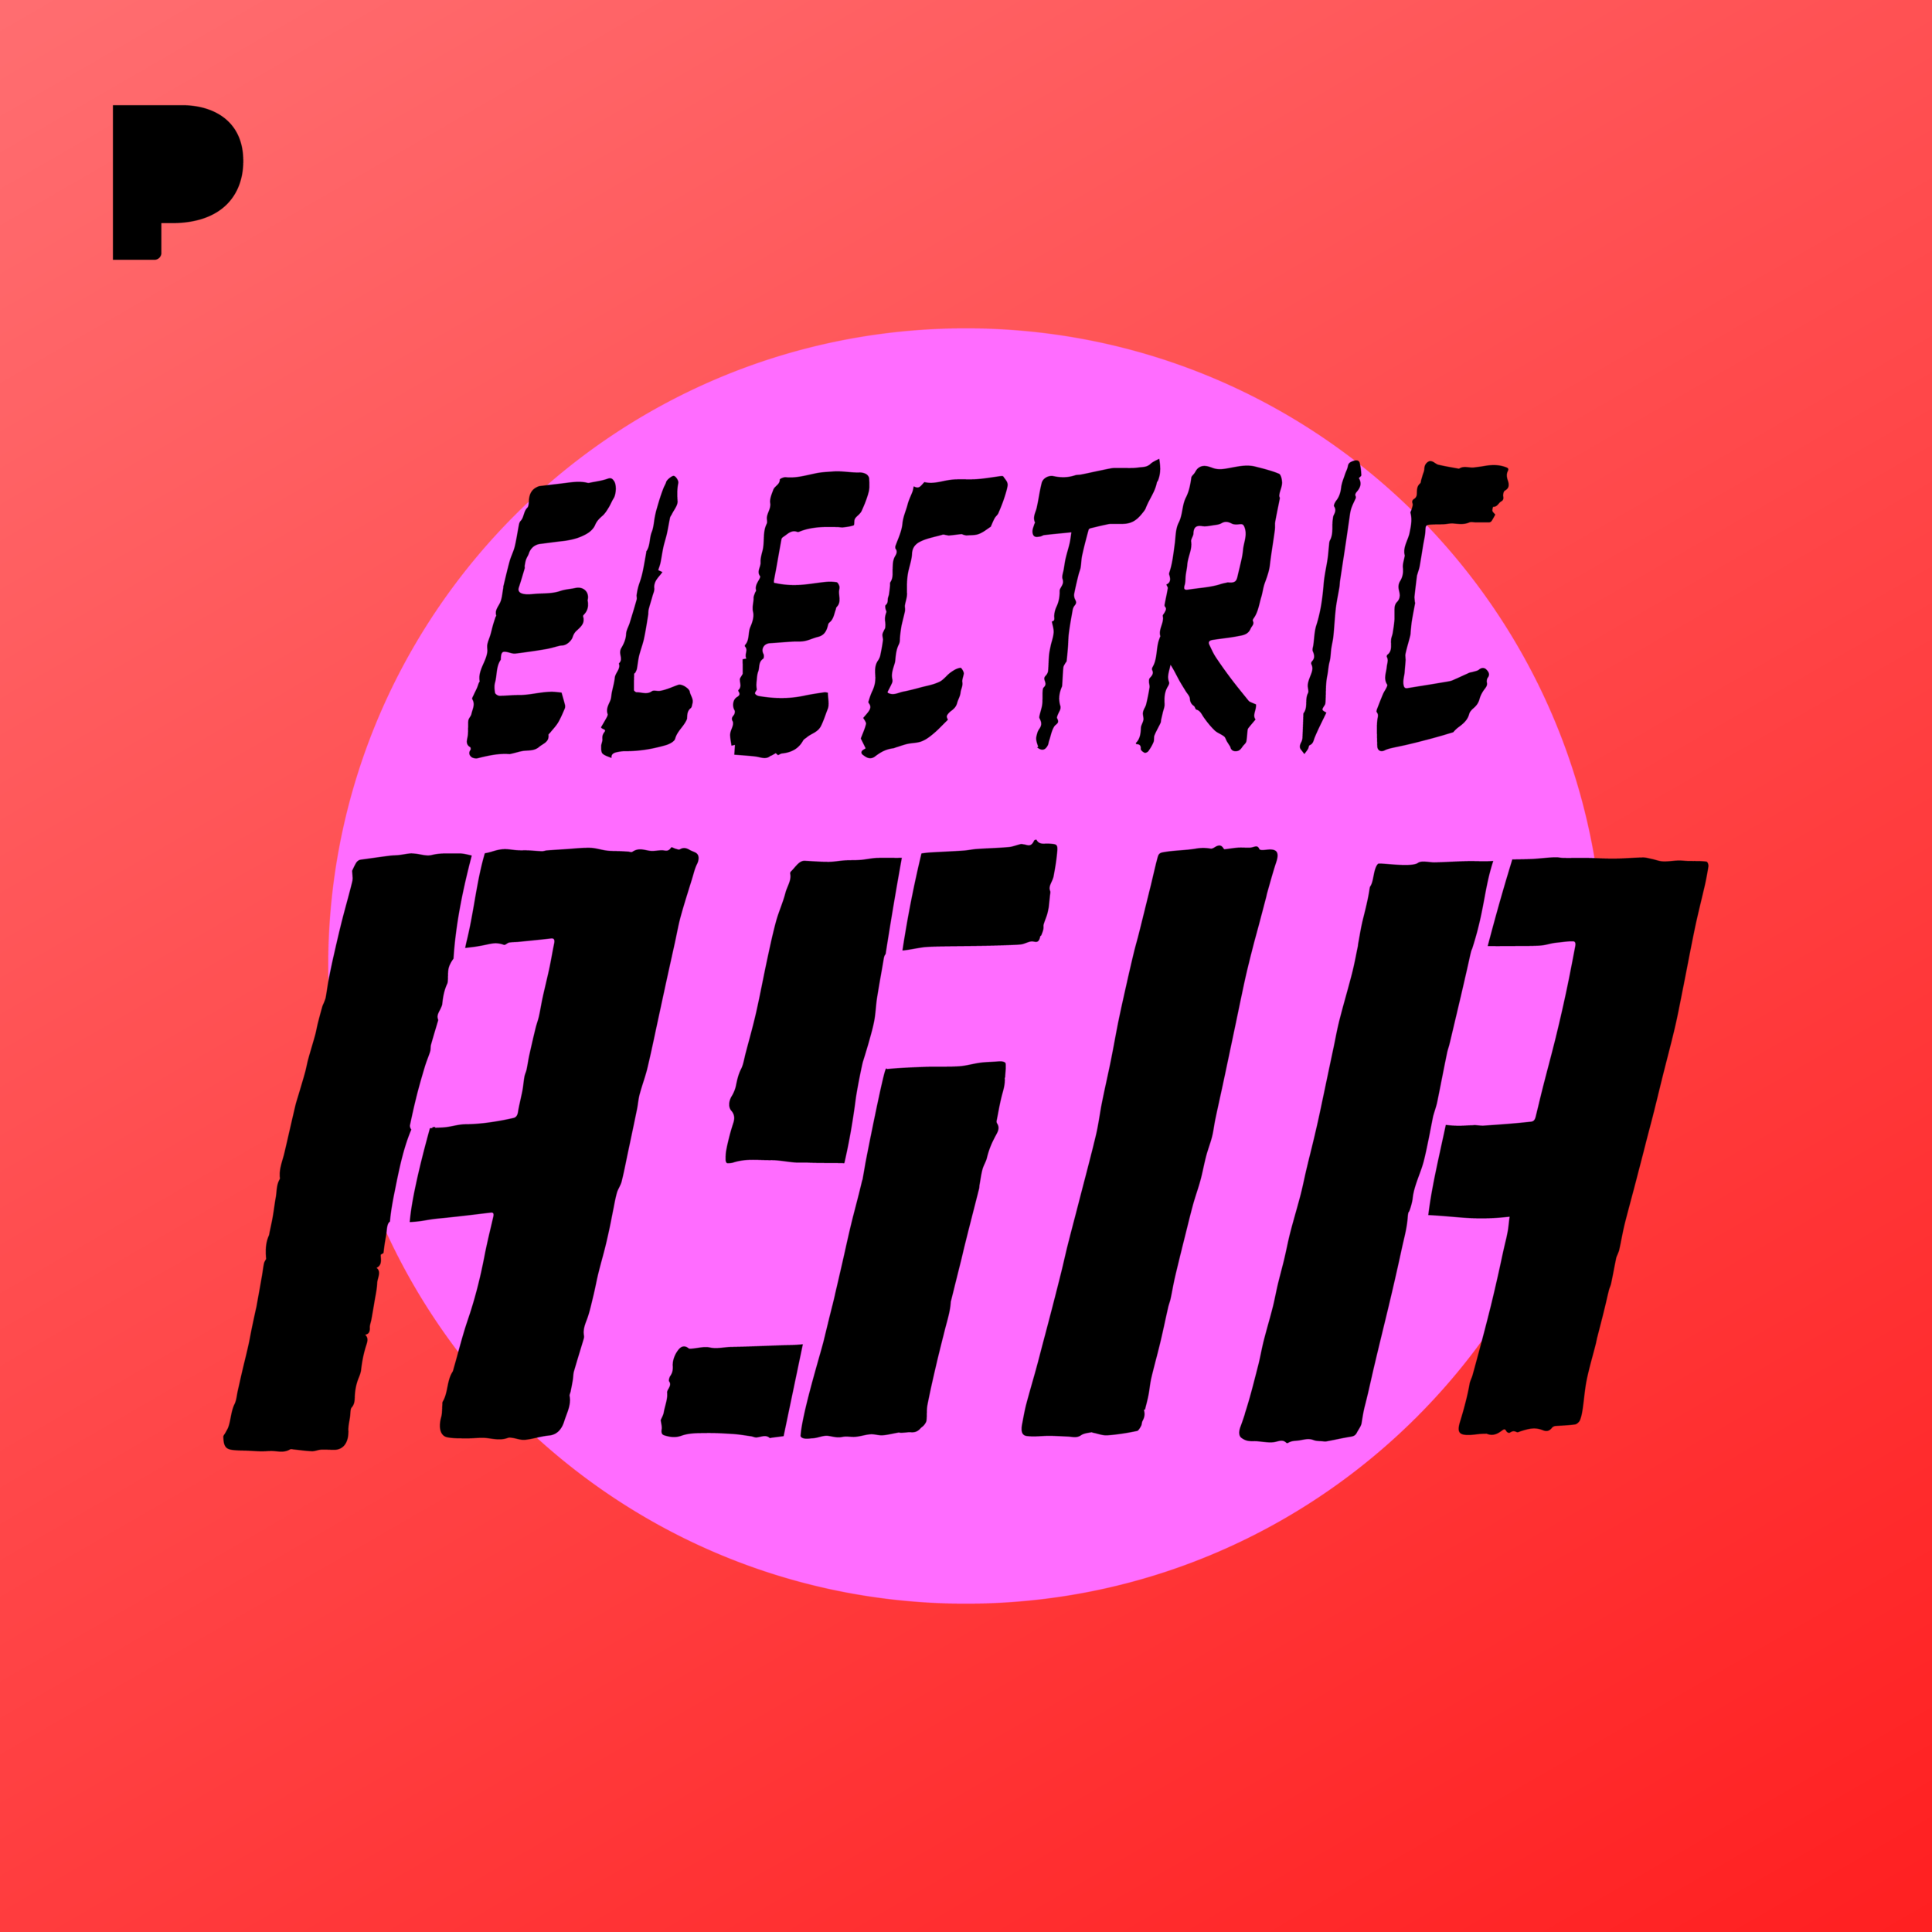 Genre_ElectricAsia_1280x1280.png